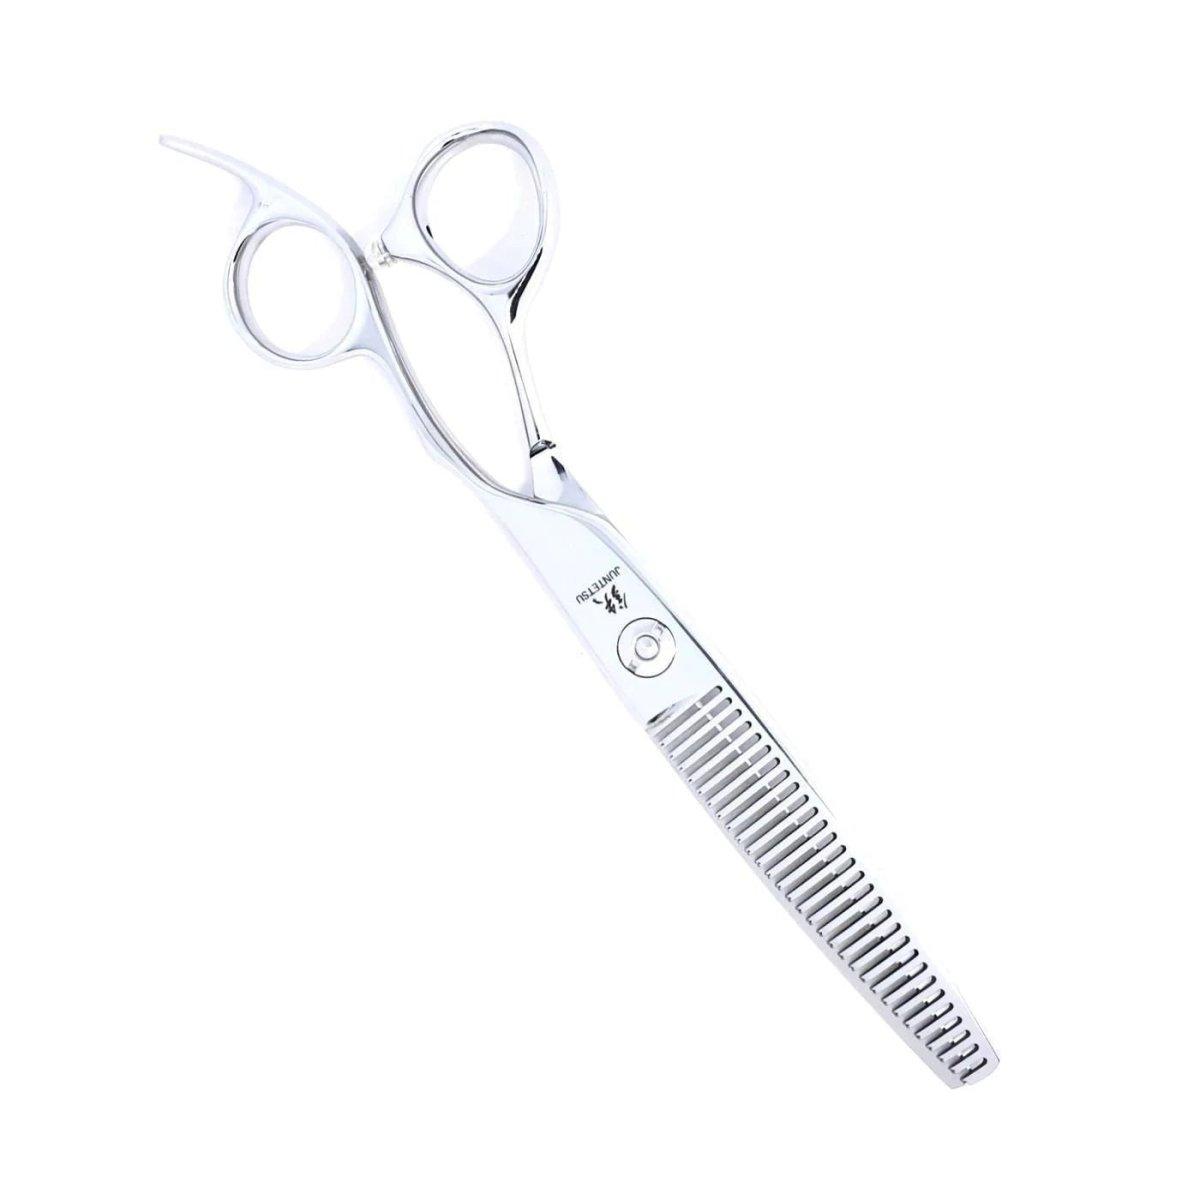 Juntetsu Offset Thinning Scissors - Japan Scissors